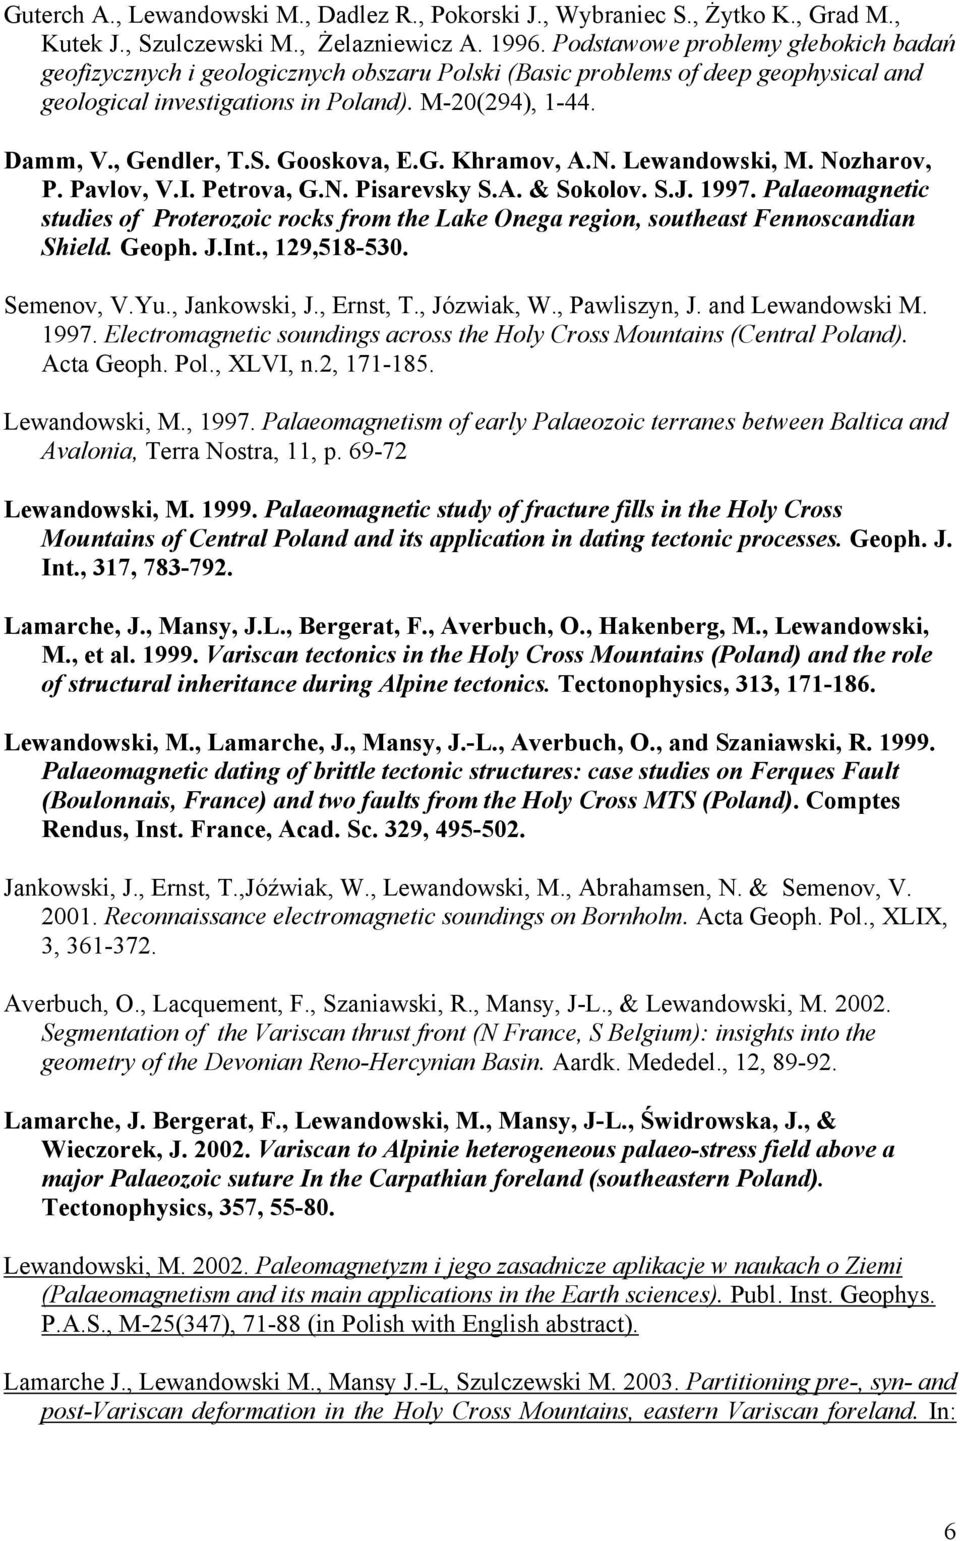 Gooskova, E.G. Khramov, A.N. Lewandowski, M. Nozharov, P. Pavlov, V.I. Petrova, G.N. Pisarevsky S.A. & Sokolov. S.J. 1997.